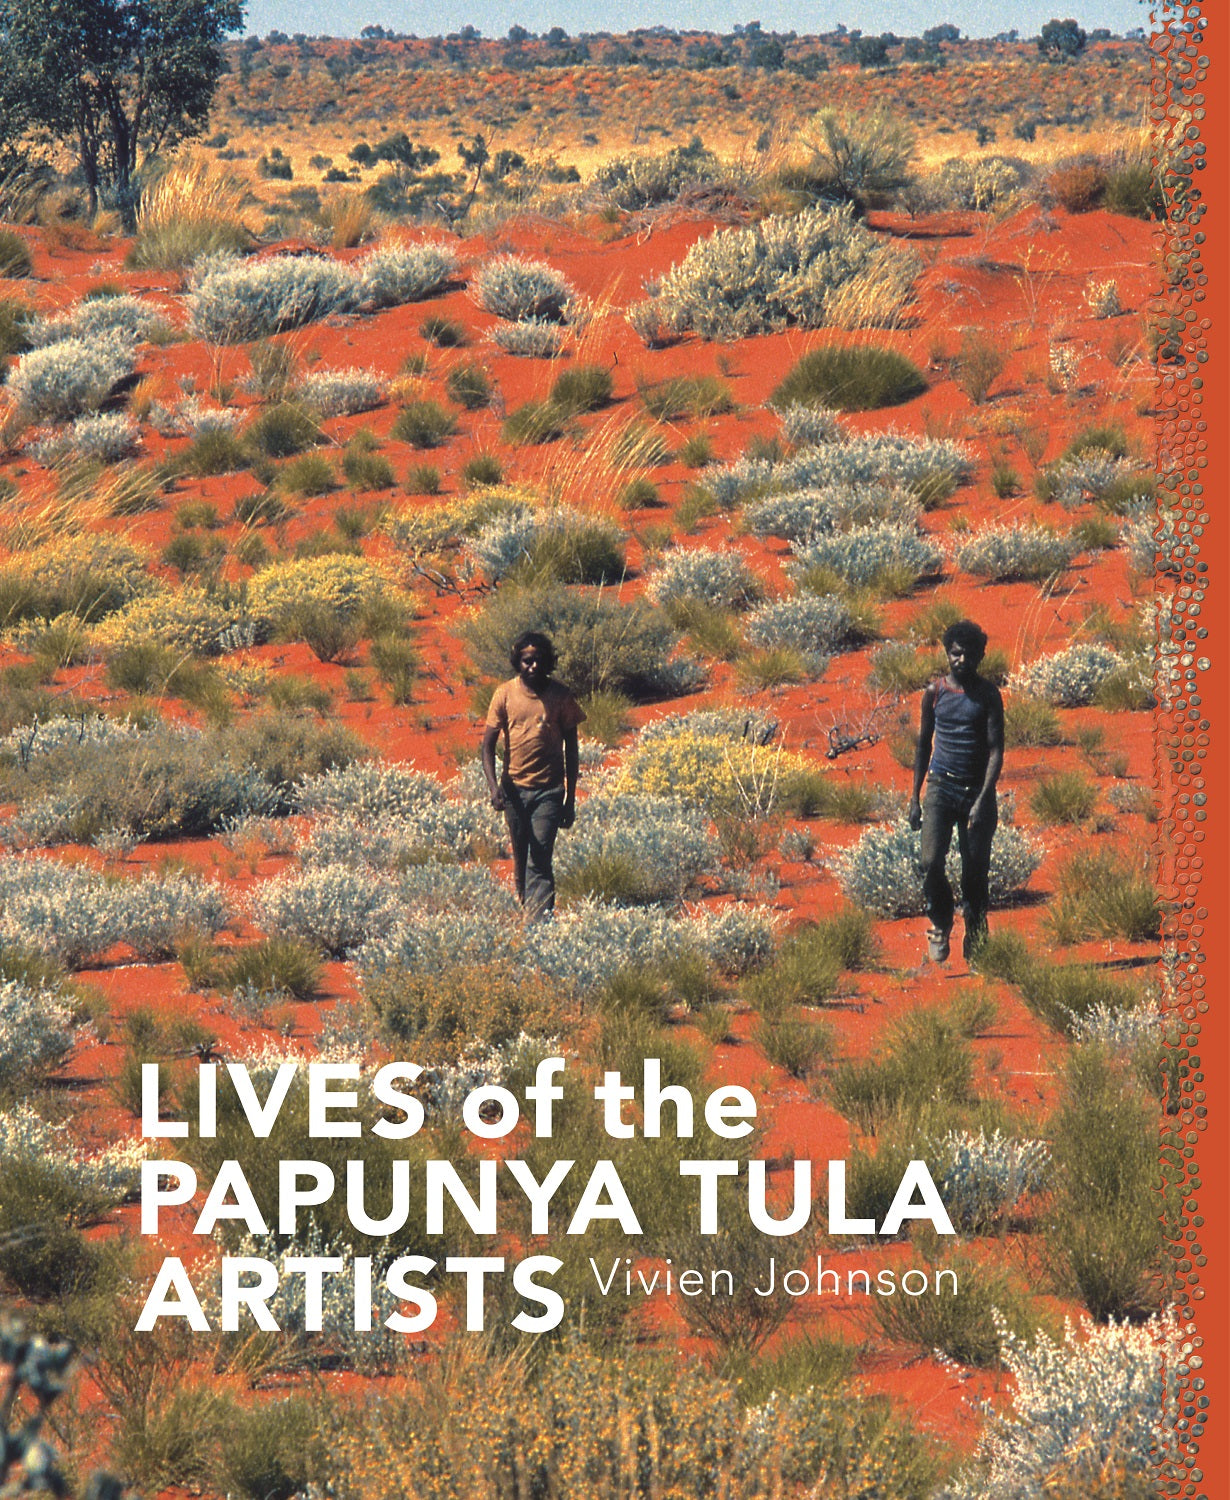 Lives of the Papunya Tula Artists | IAD Press | Australian Aboriginal Publisher & Book Shop